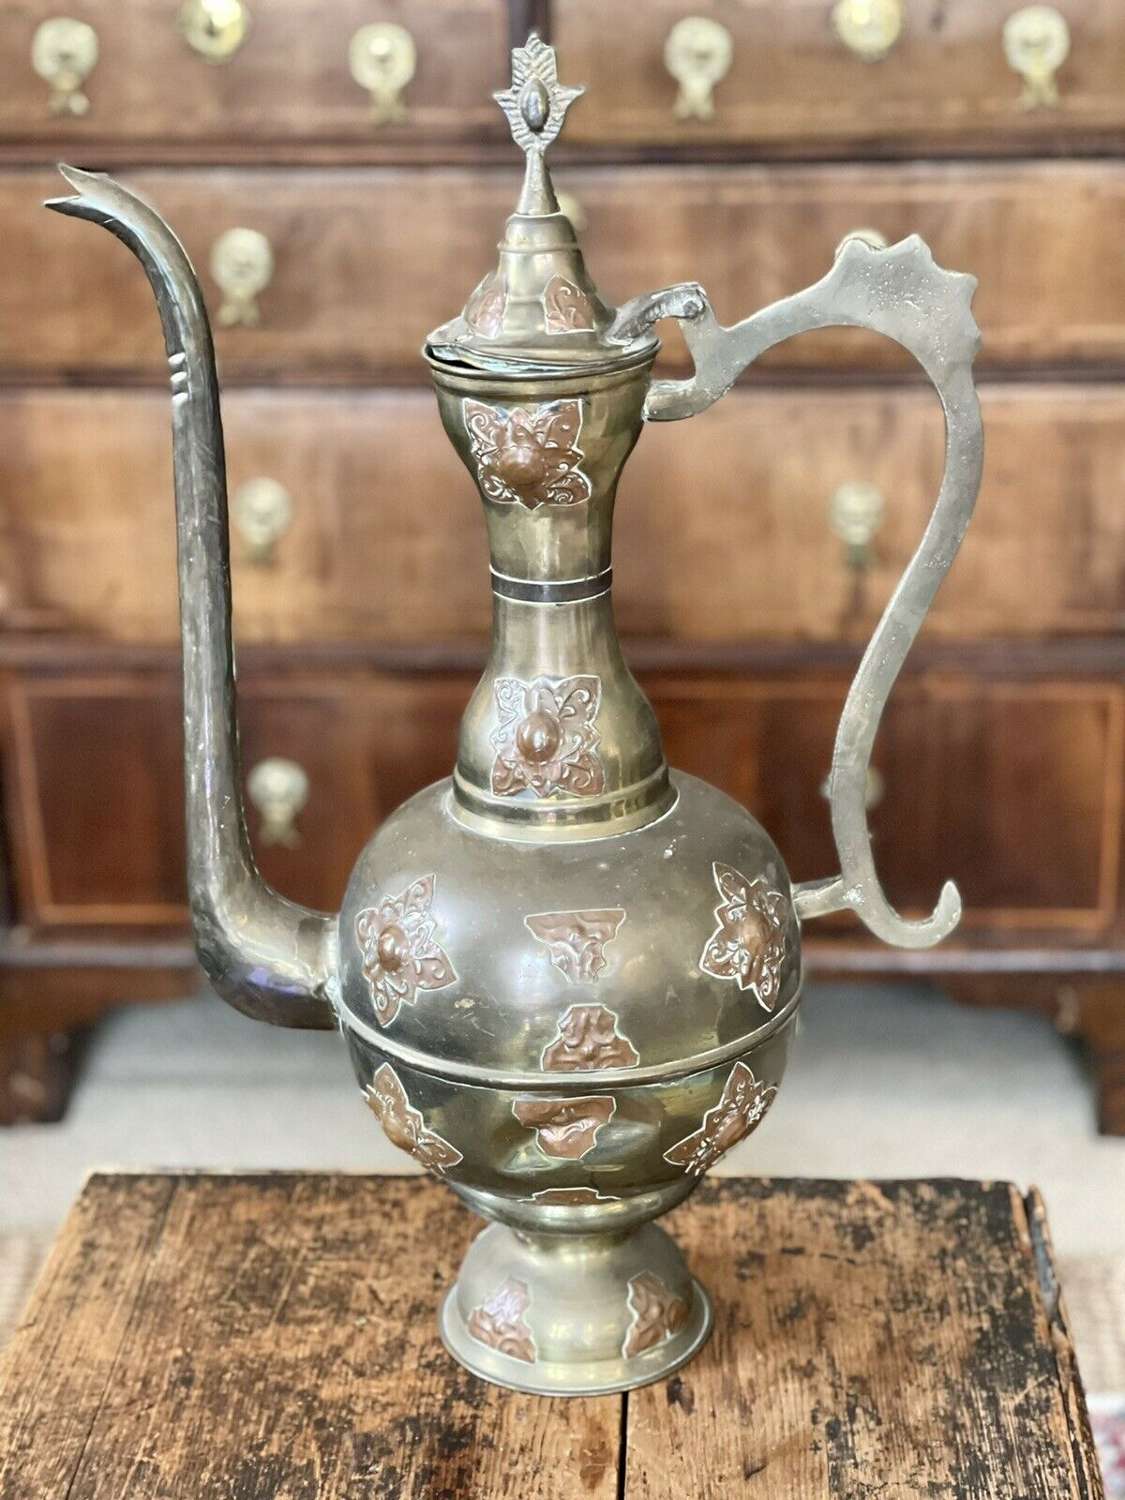 Arabian Dallah coffee pot.